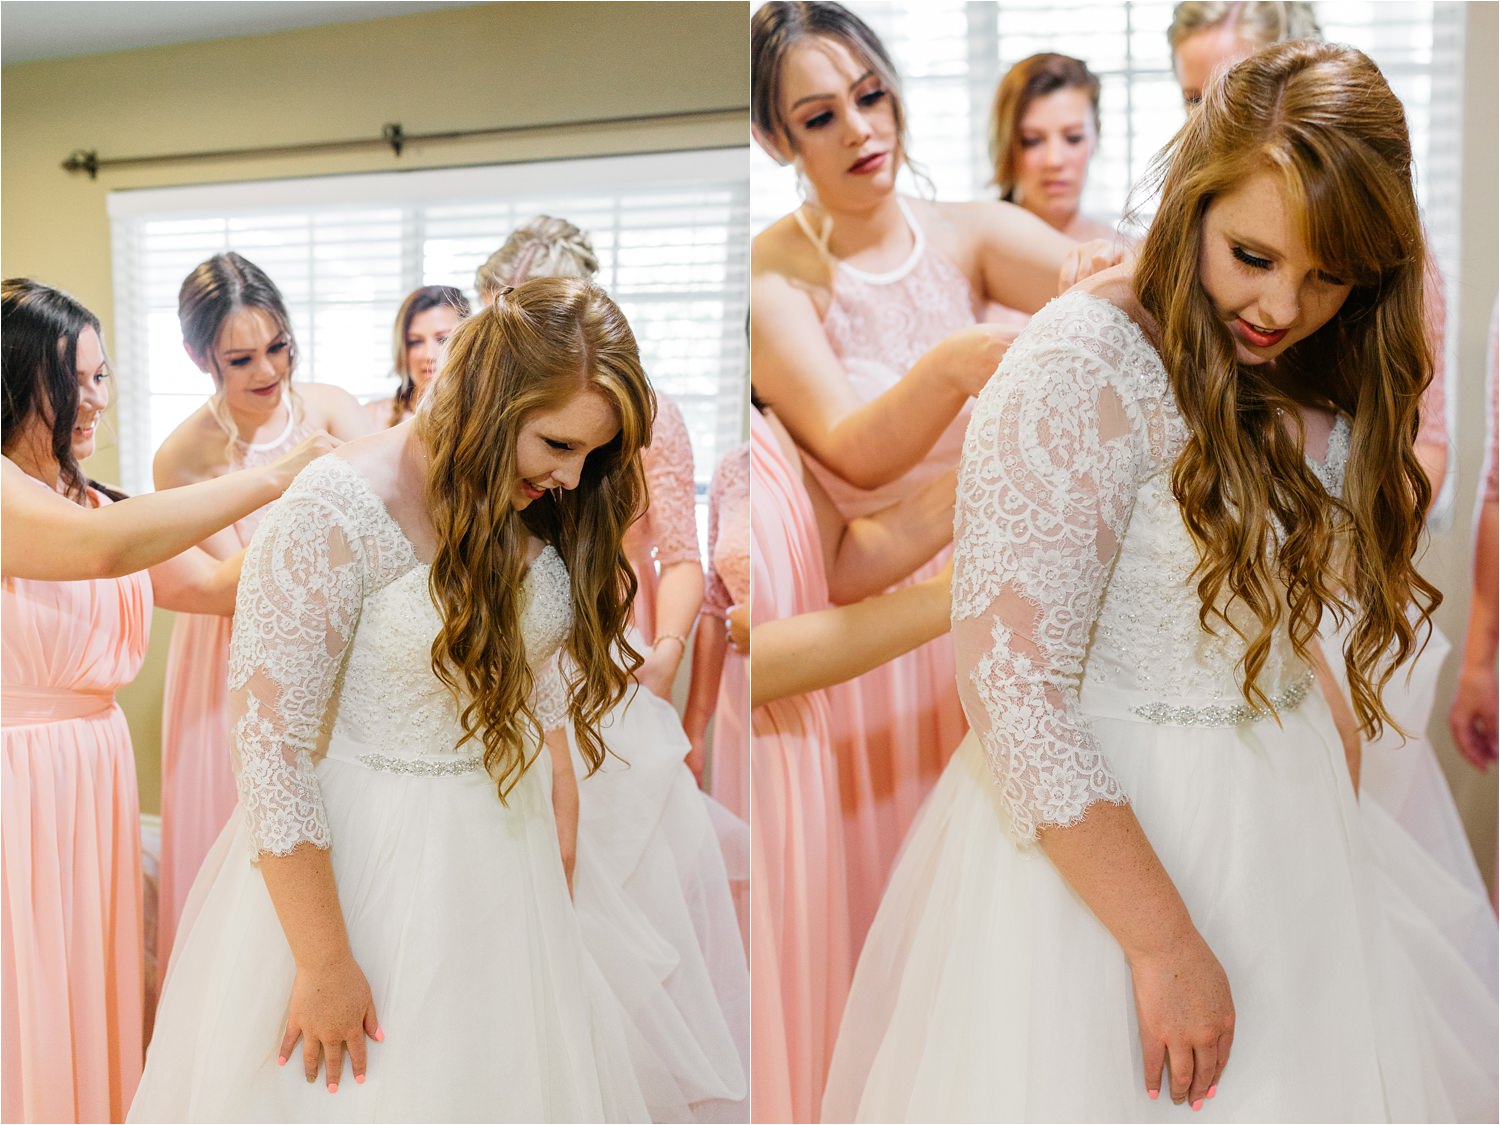 Bride getting into wedding dress - Chino Hills wedding - https://brittneyhannonphotography.com